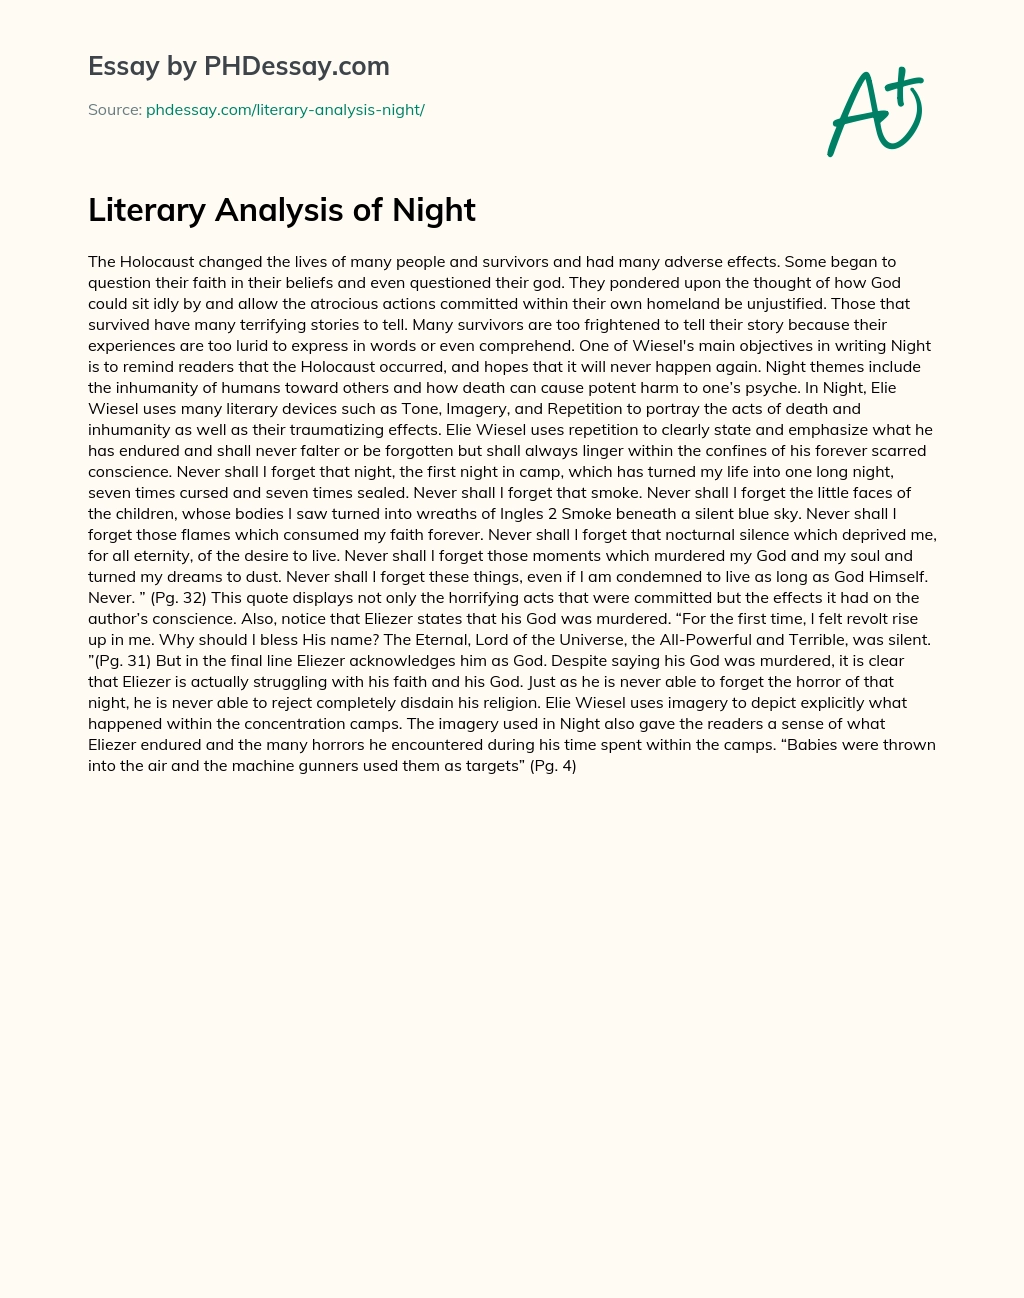 literary analysis essay for night